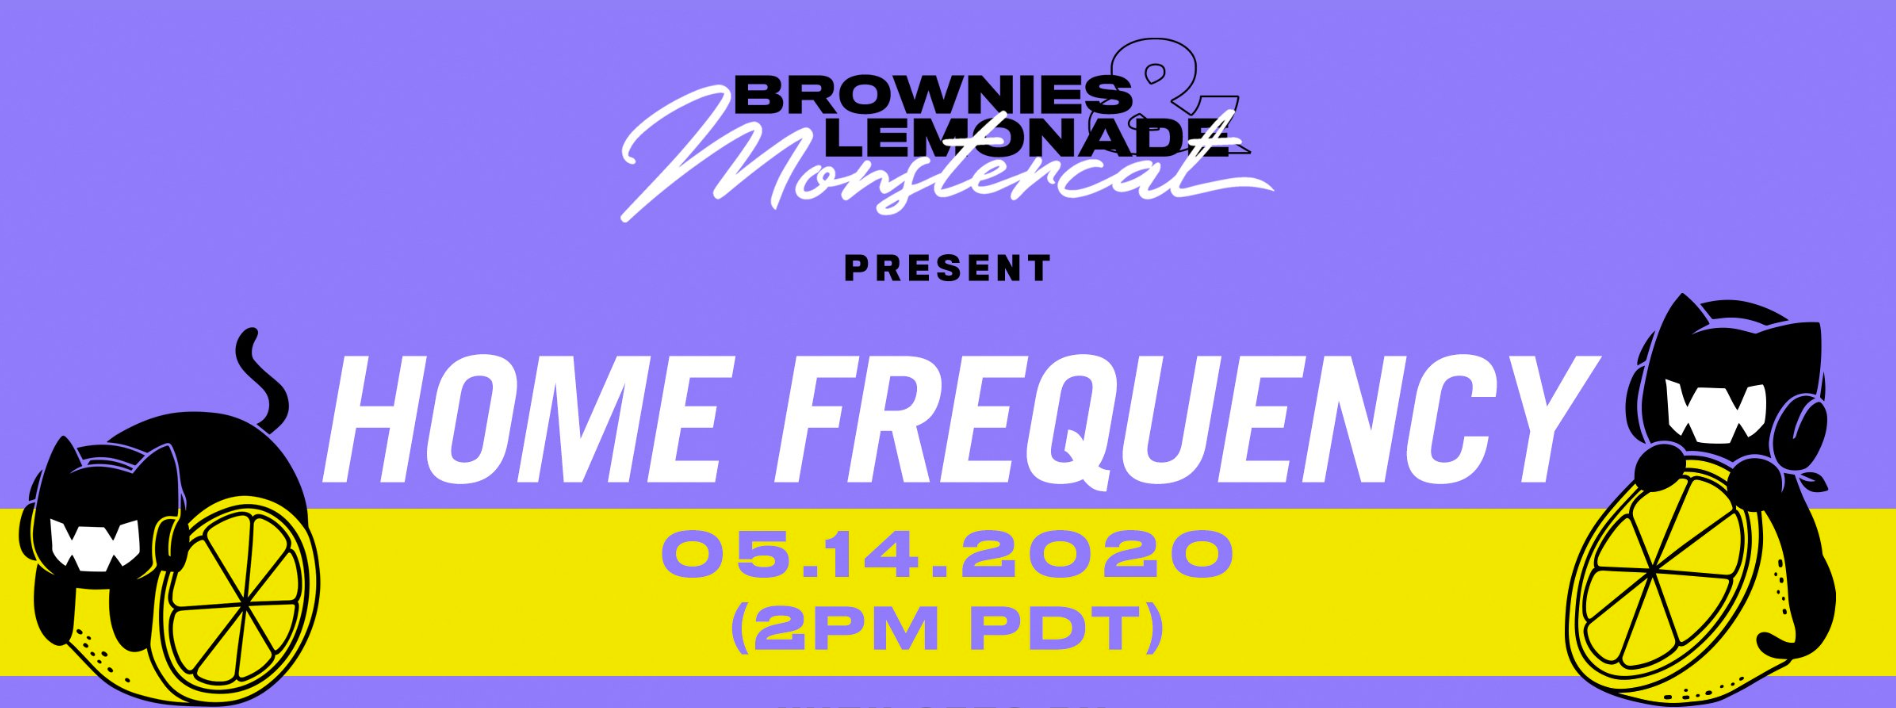 Brownies & Lemonade and Monstercat Present Home Frequency